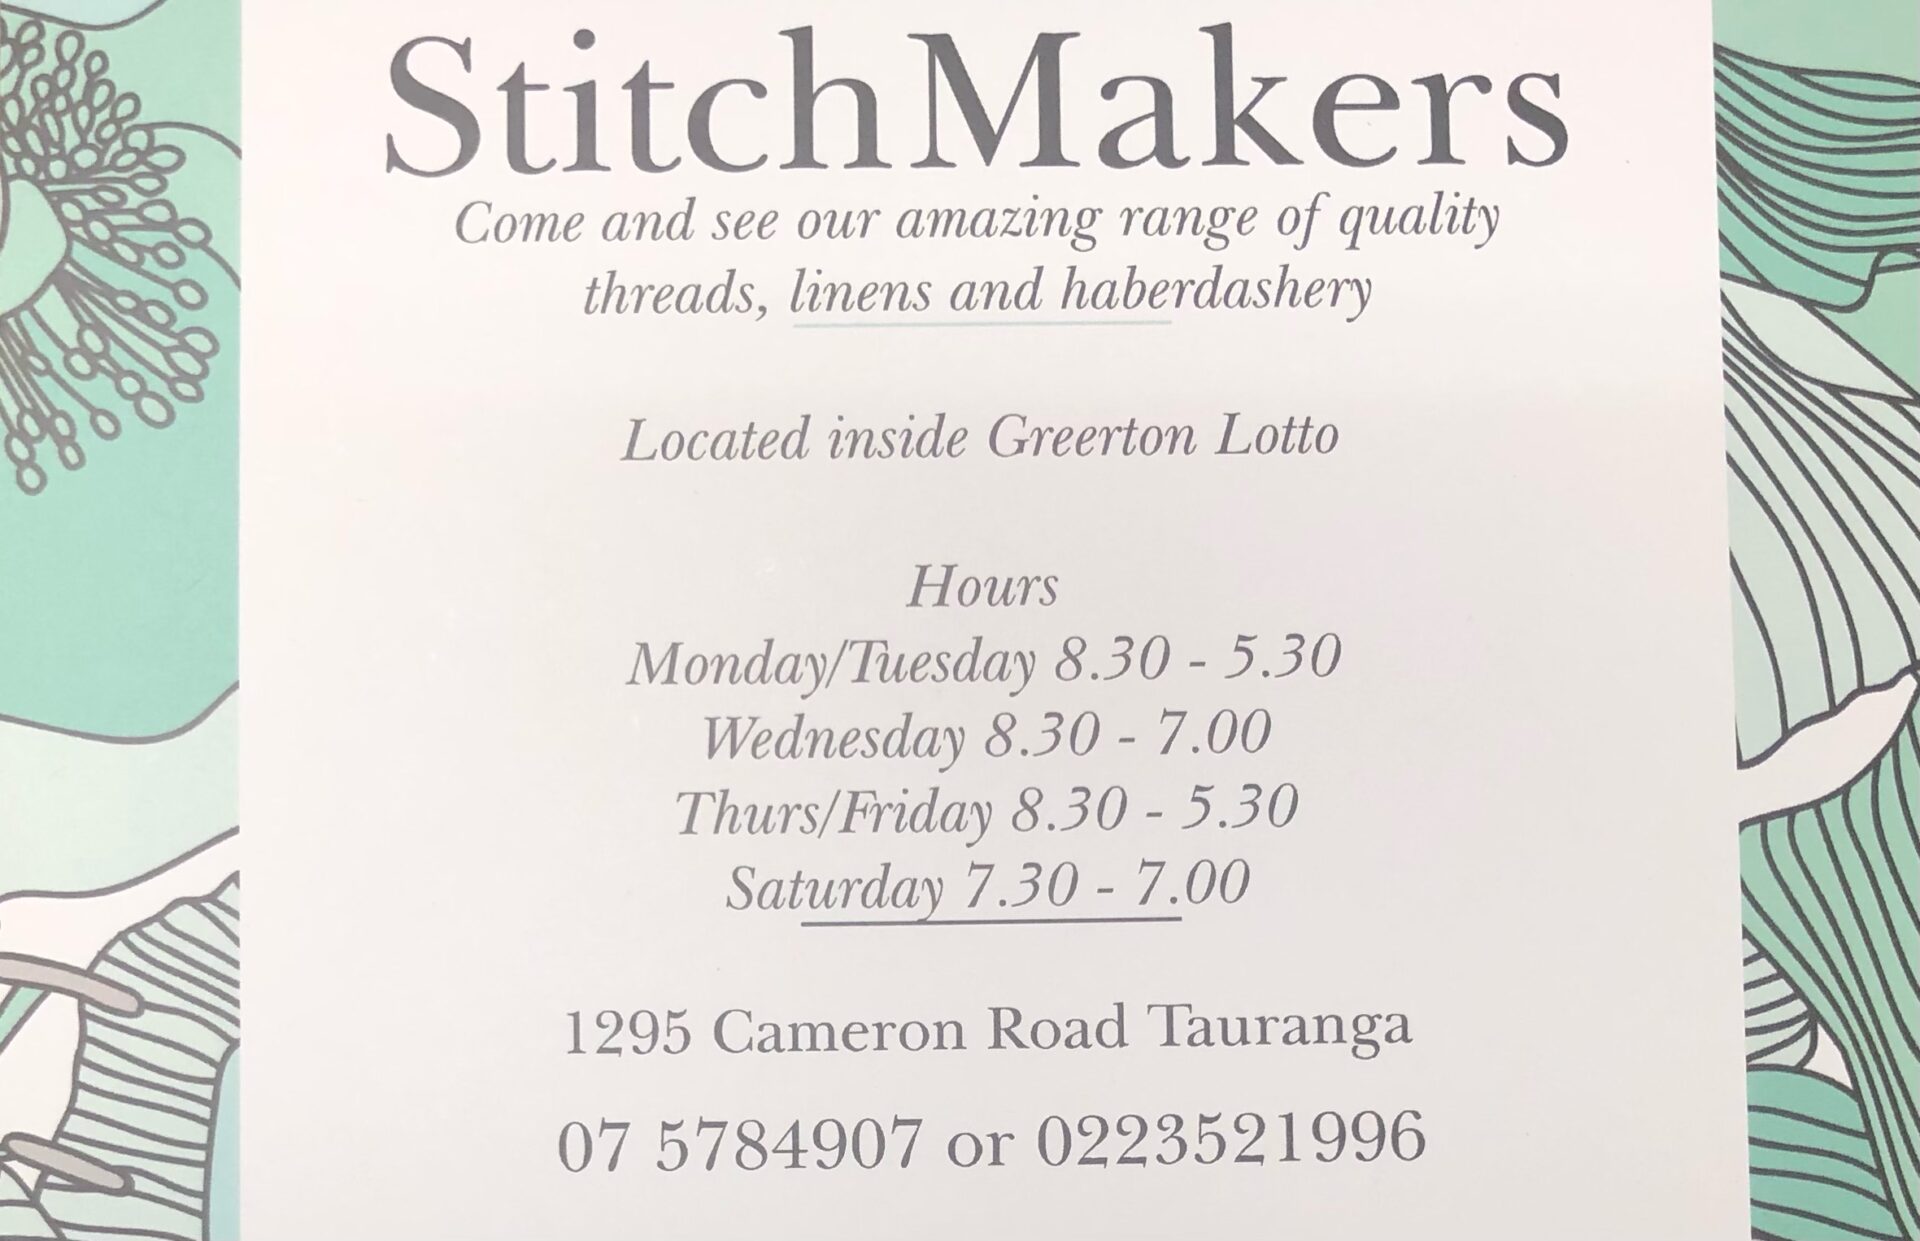 Stitch Makers